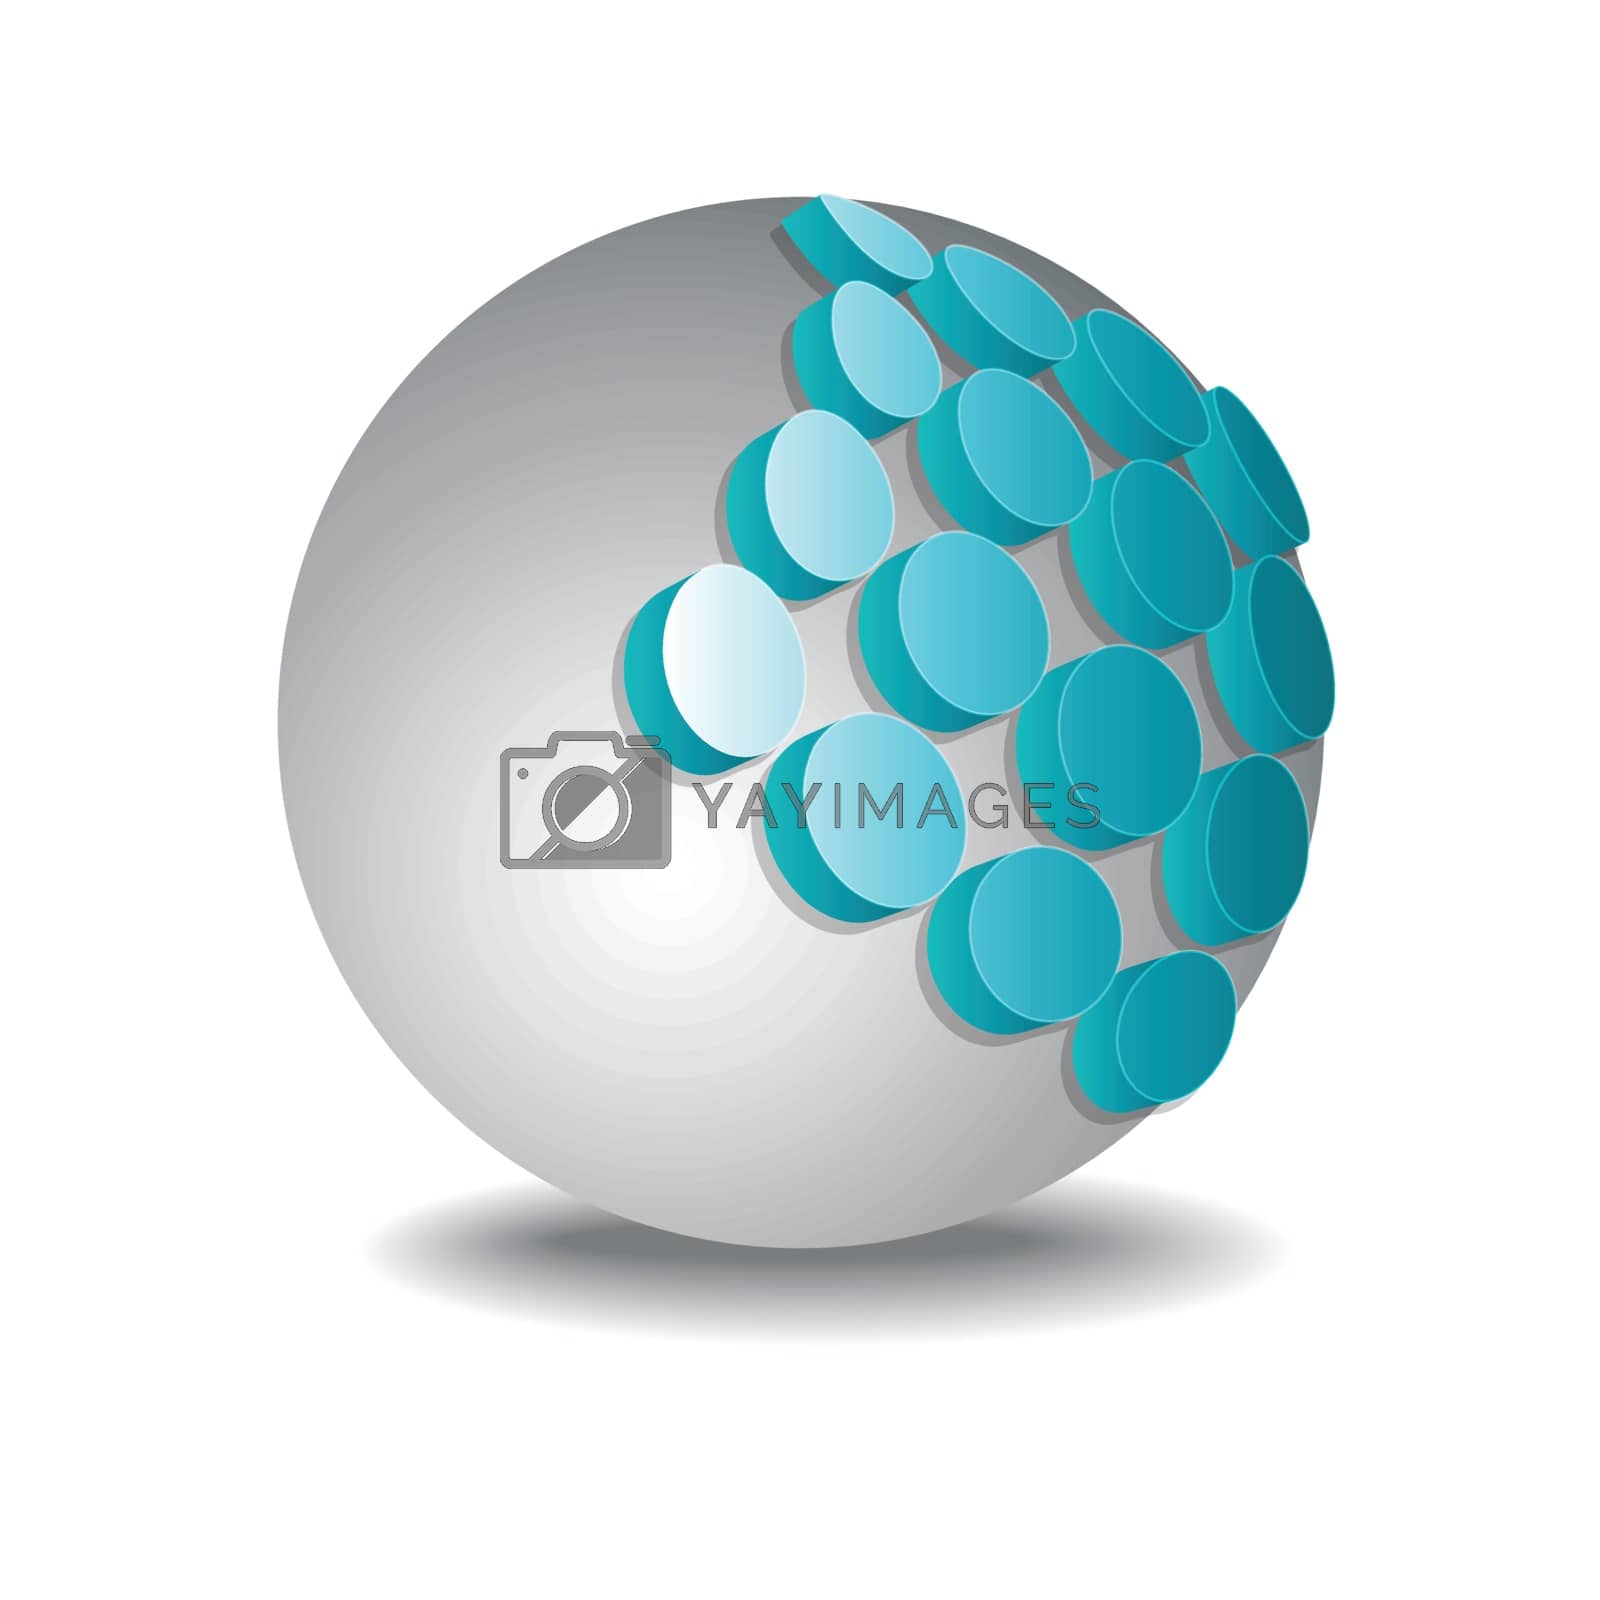 Royalty free image of Sphere 3d design by balasoiu